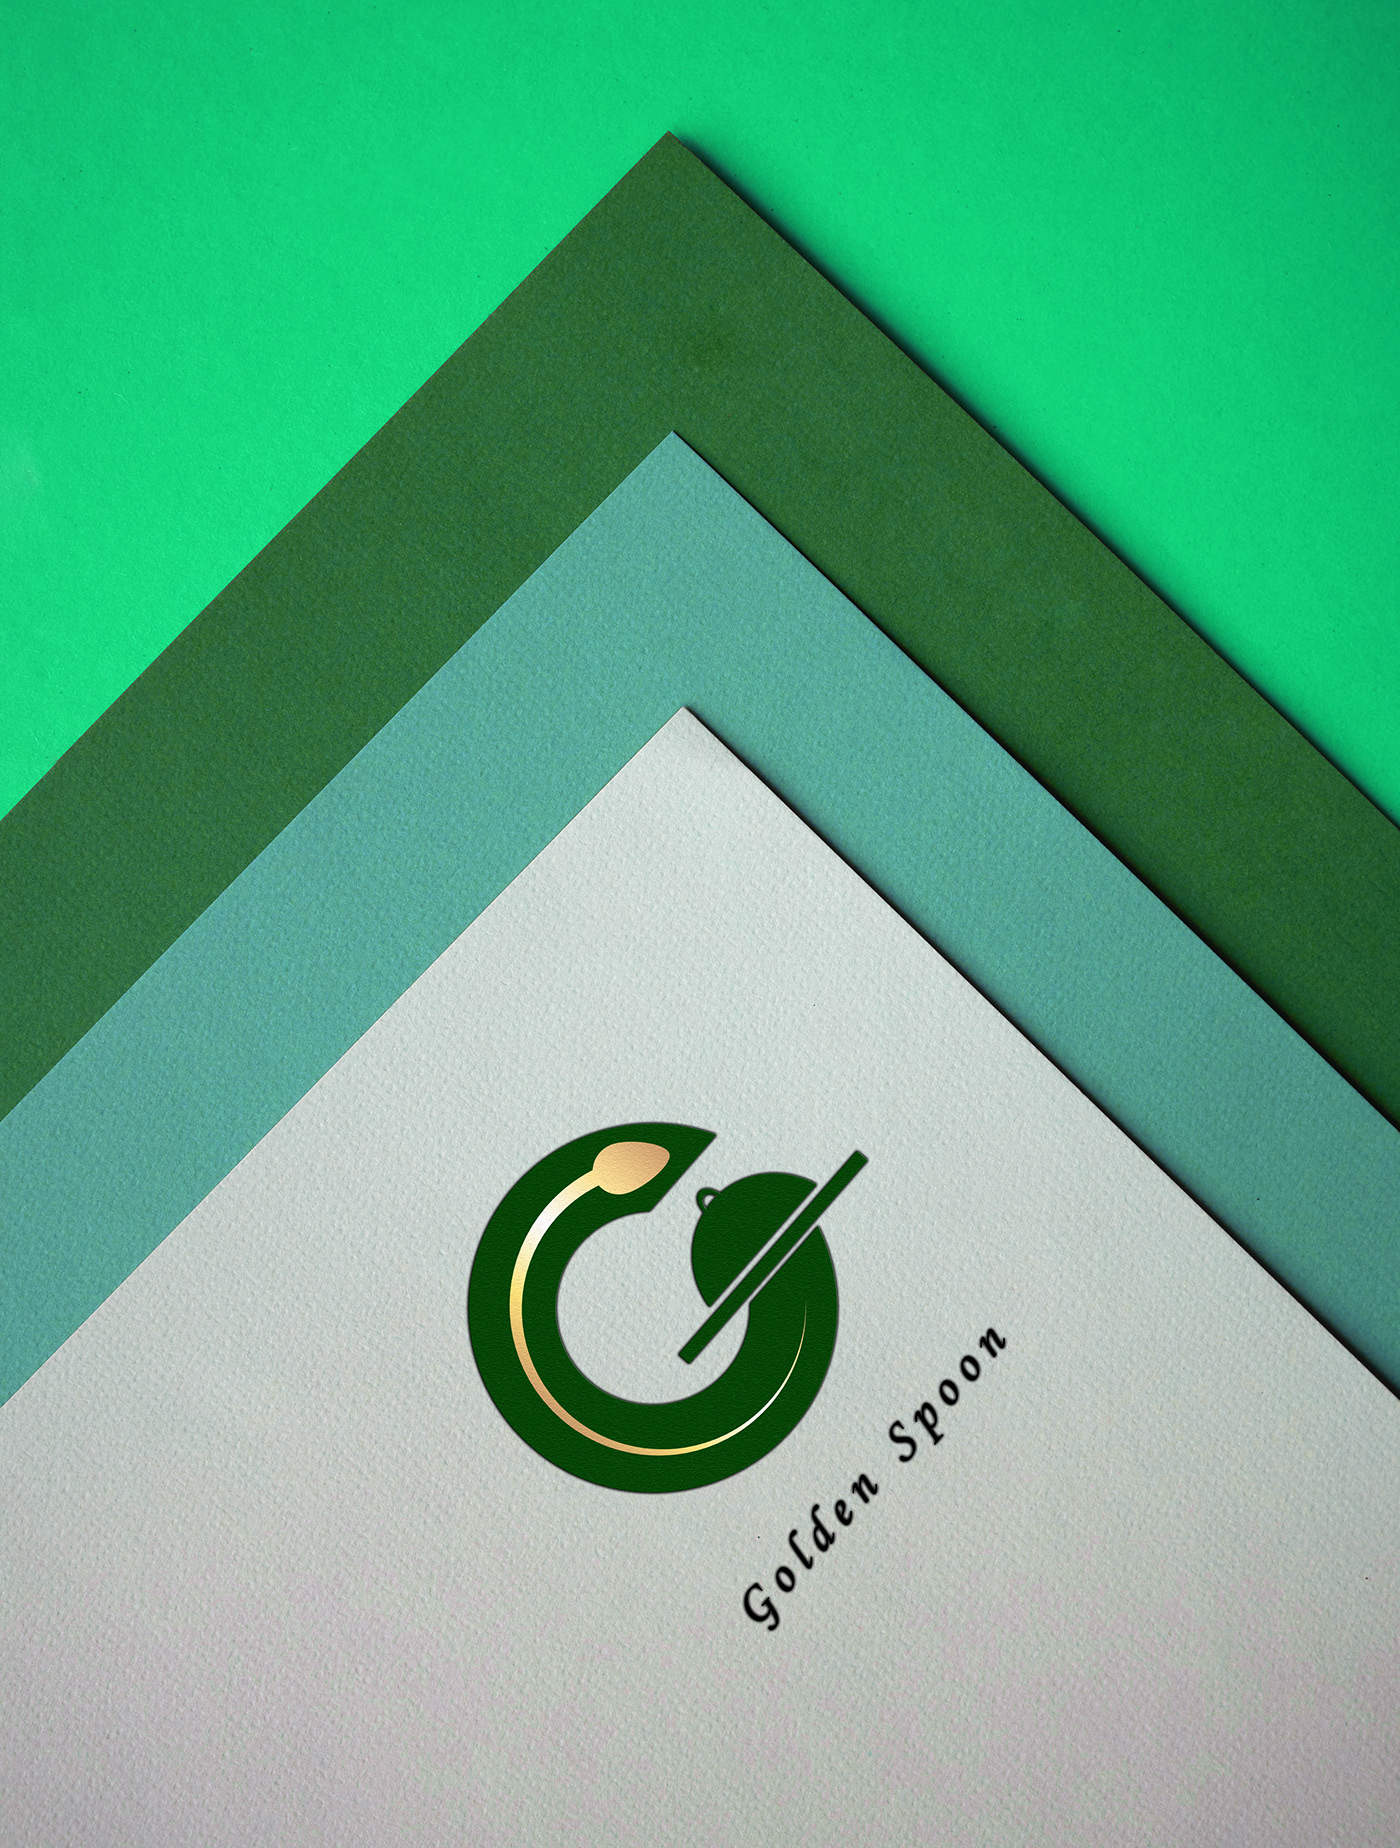 Image may contain: green and logo